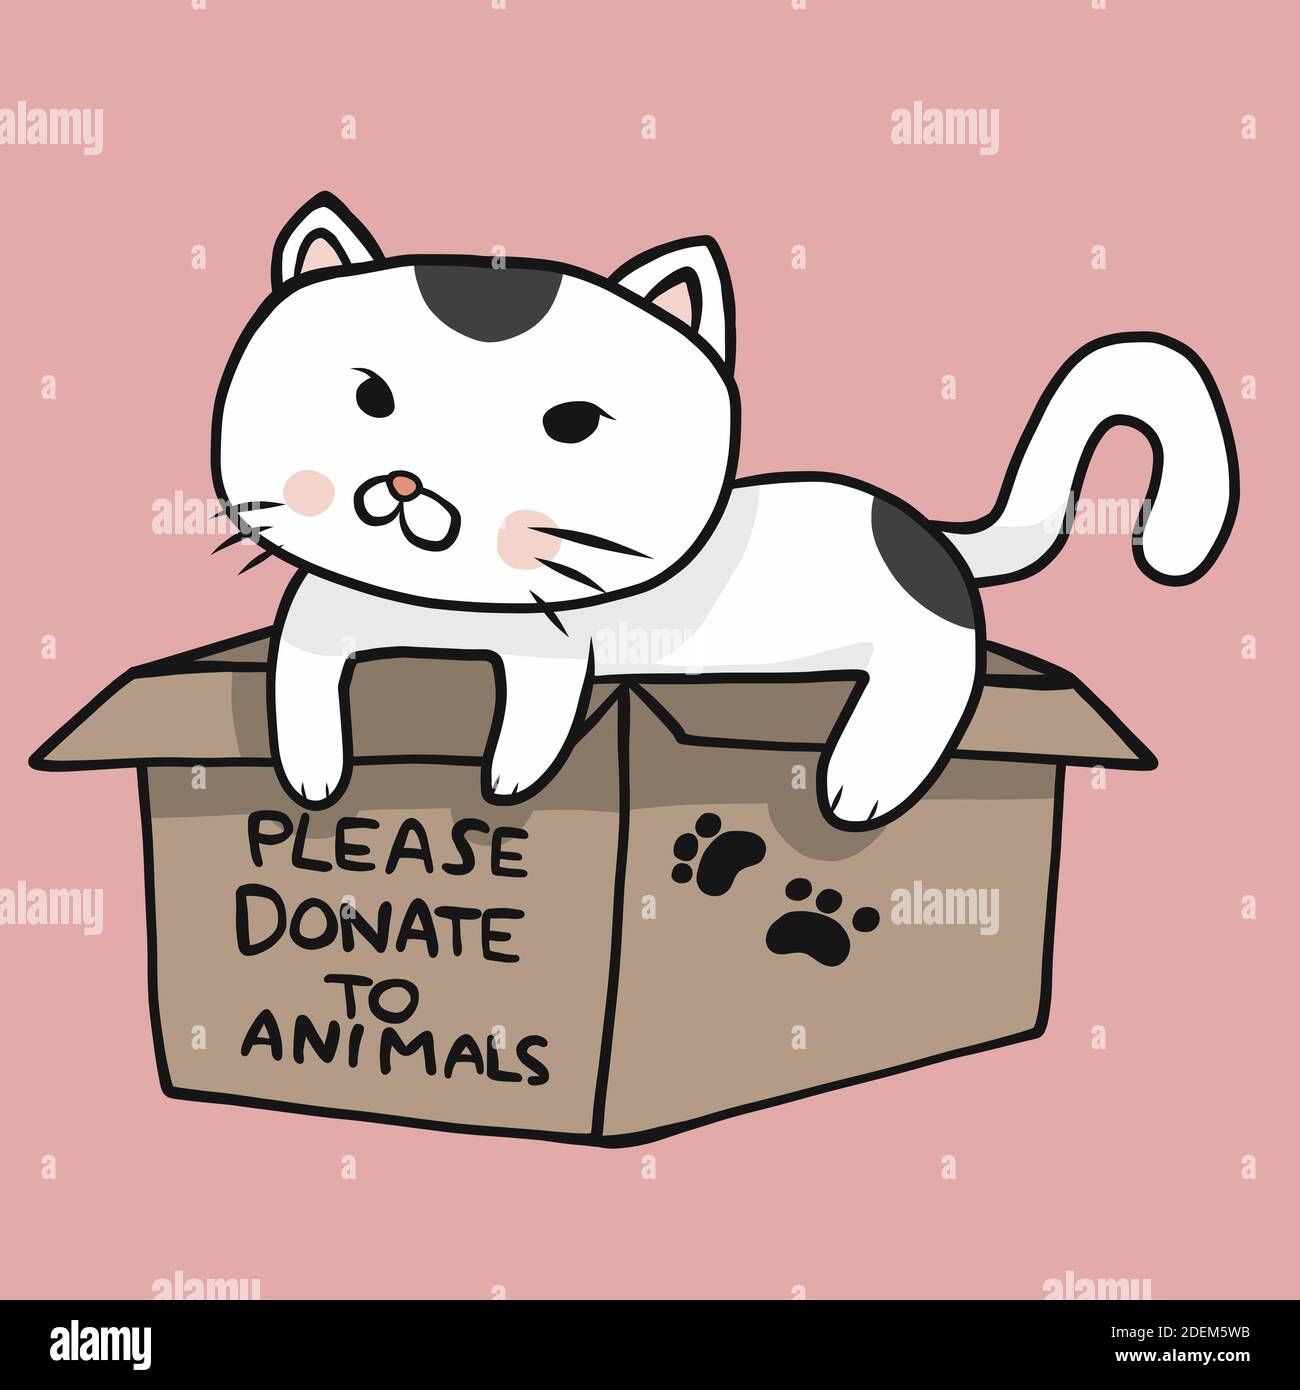 Donate animals. Плиз донат. Вектор животные в коробке. Плиз донат кошки. PLAS donate картинка.